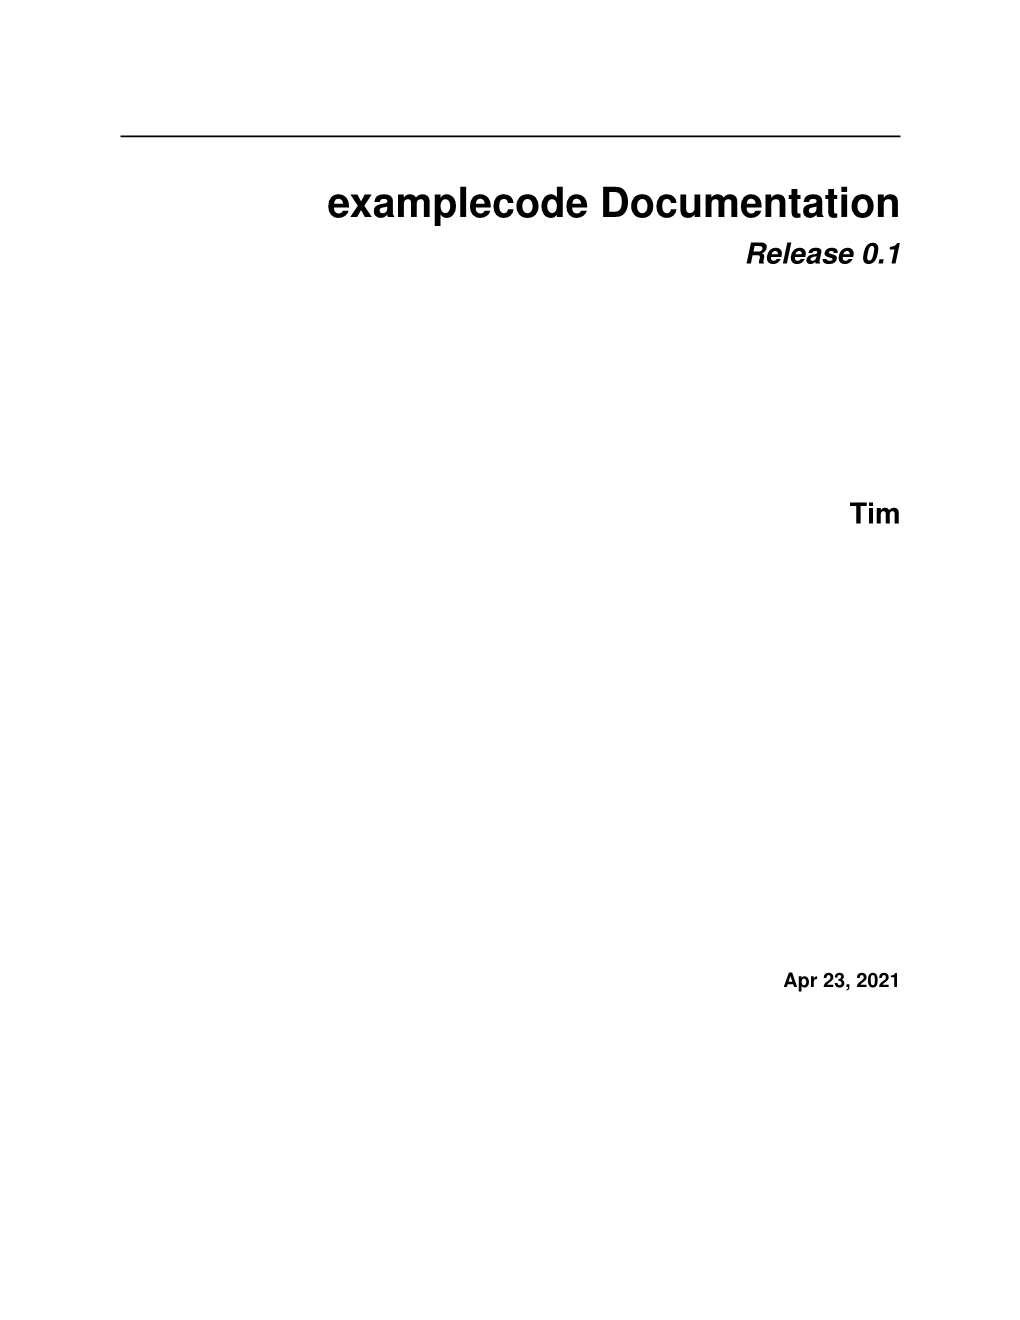 Examplecode Documentation Release 0.1